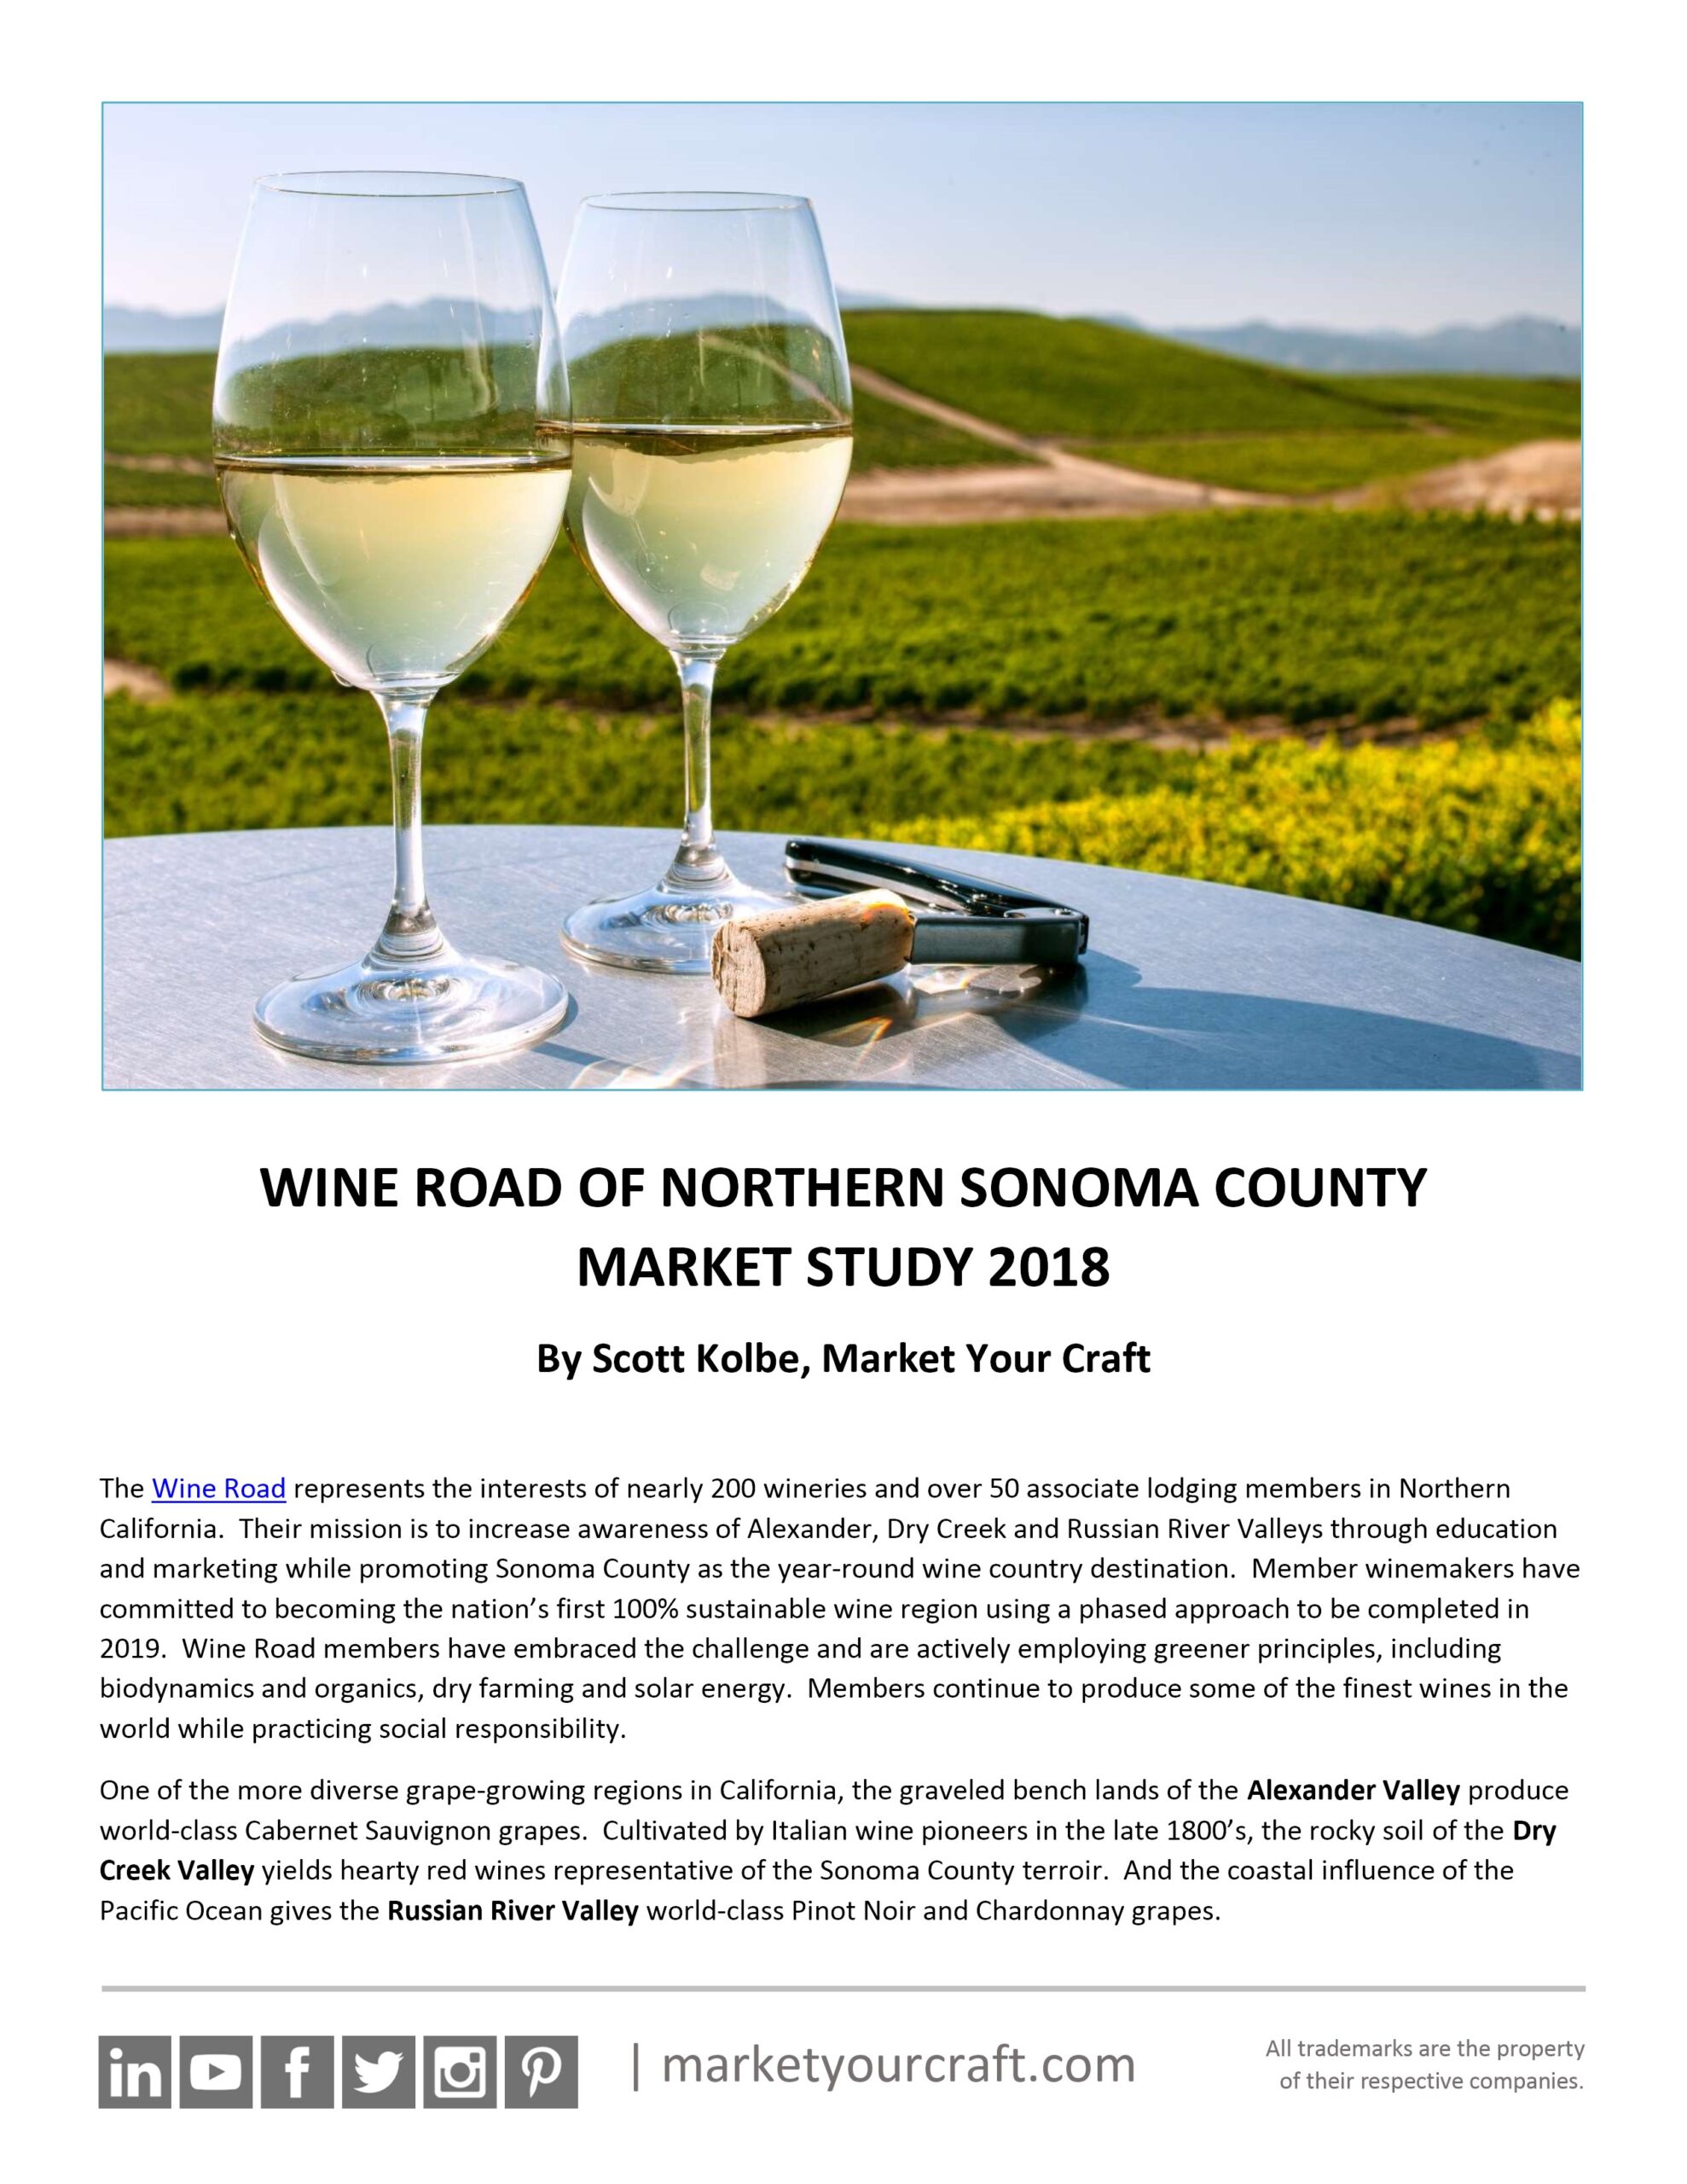 Wine Road Market Study Sample